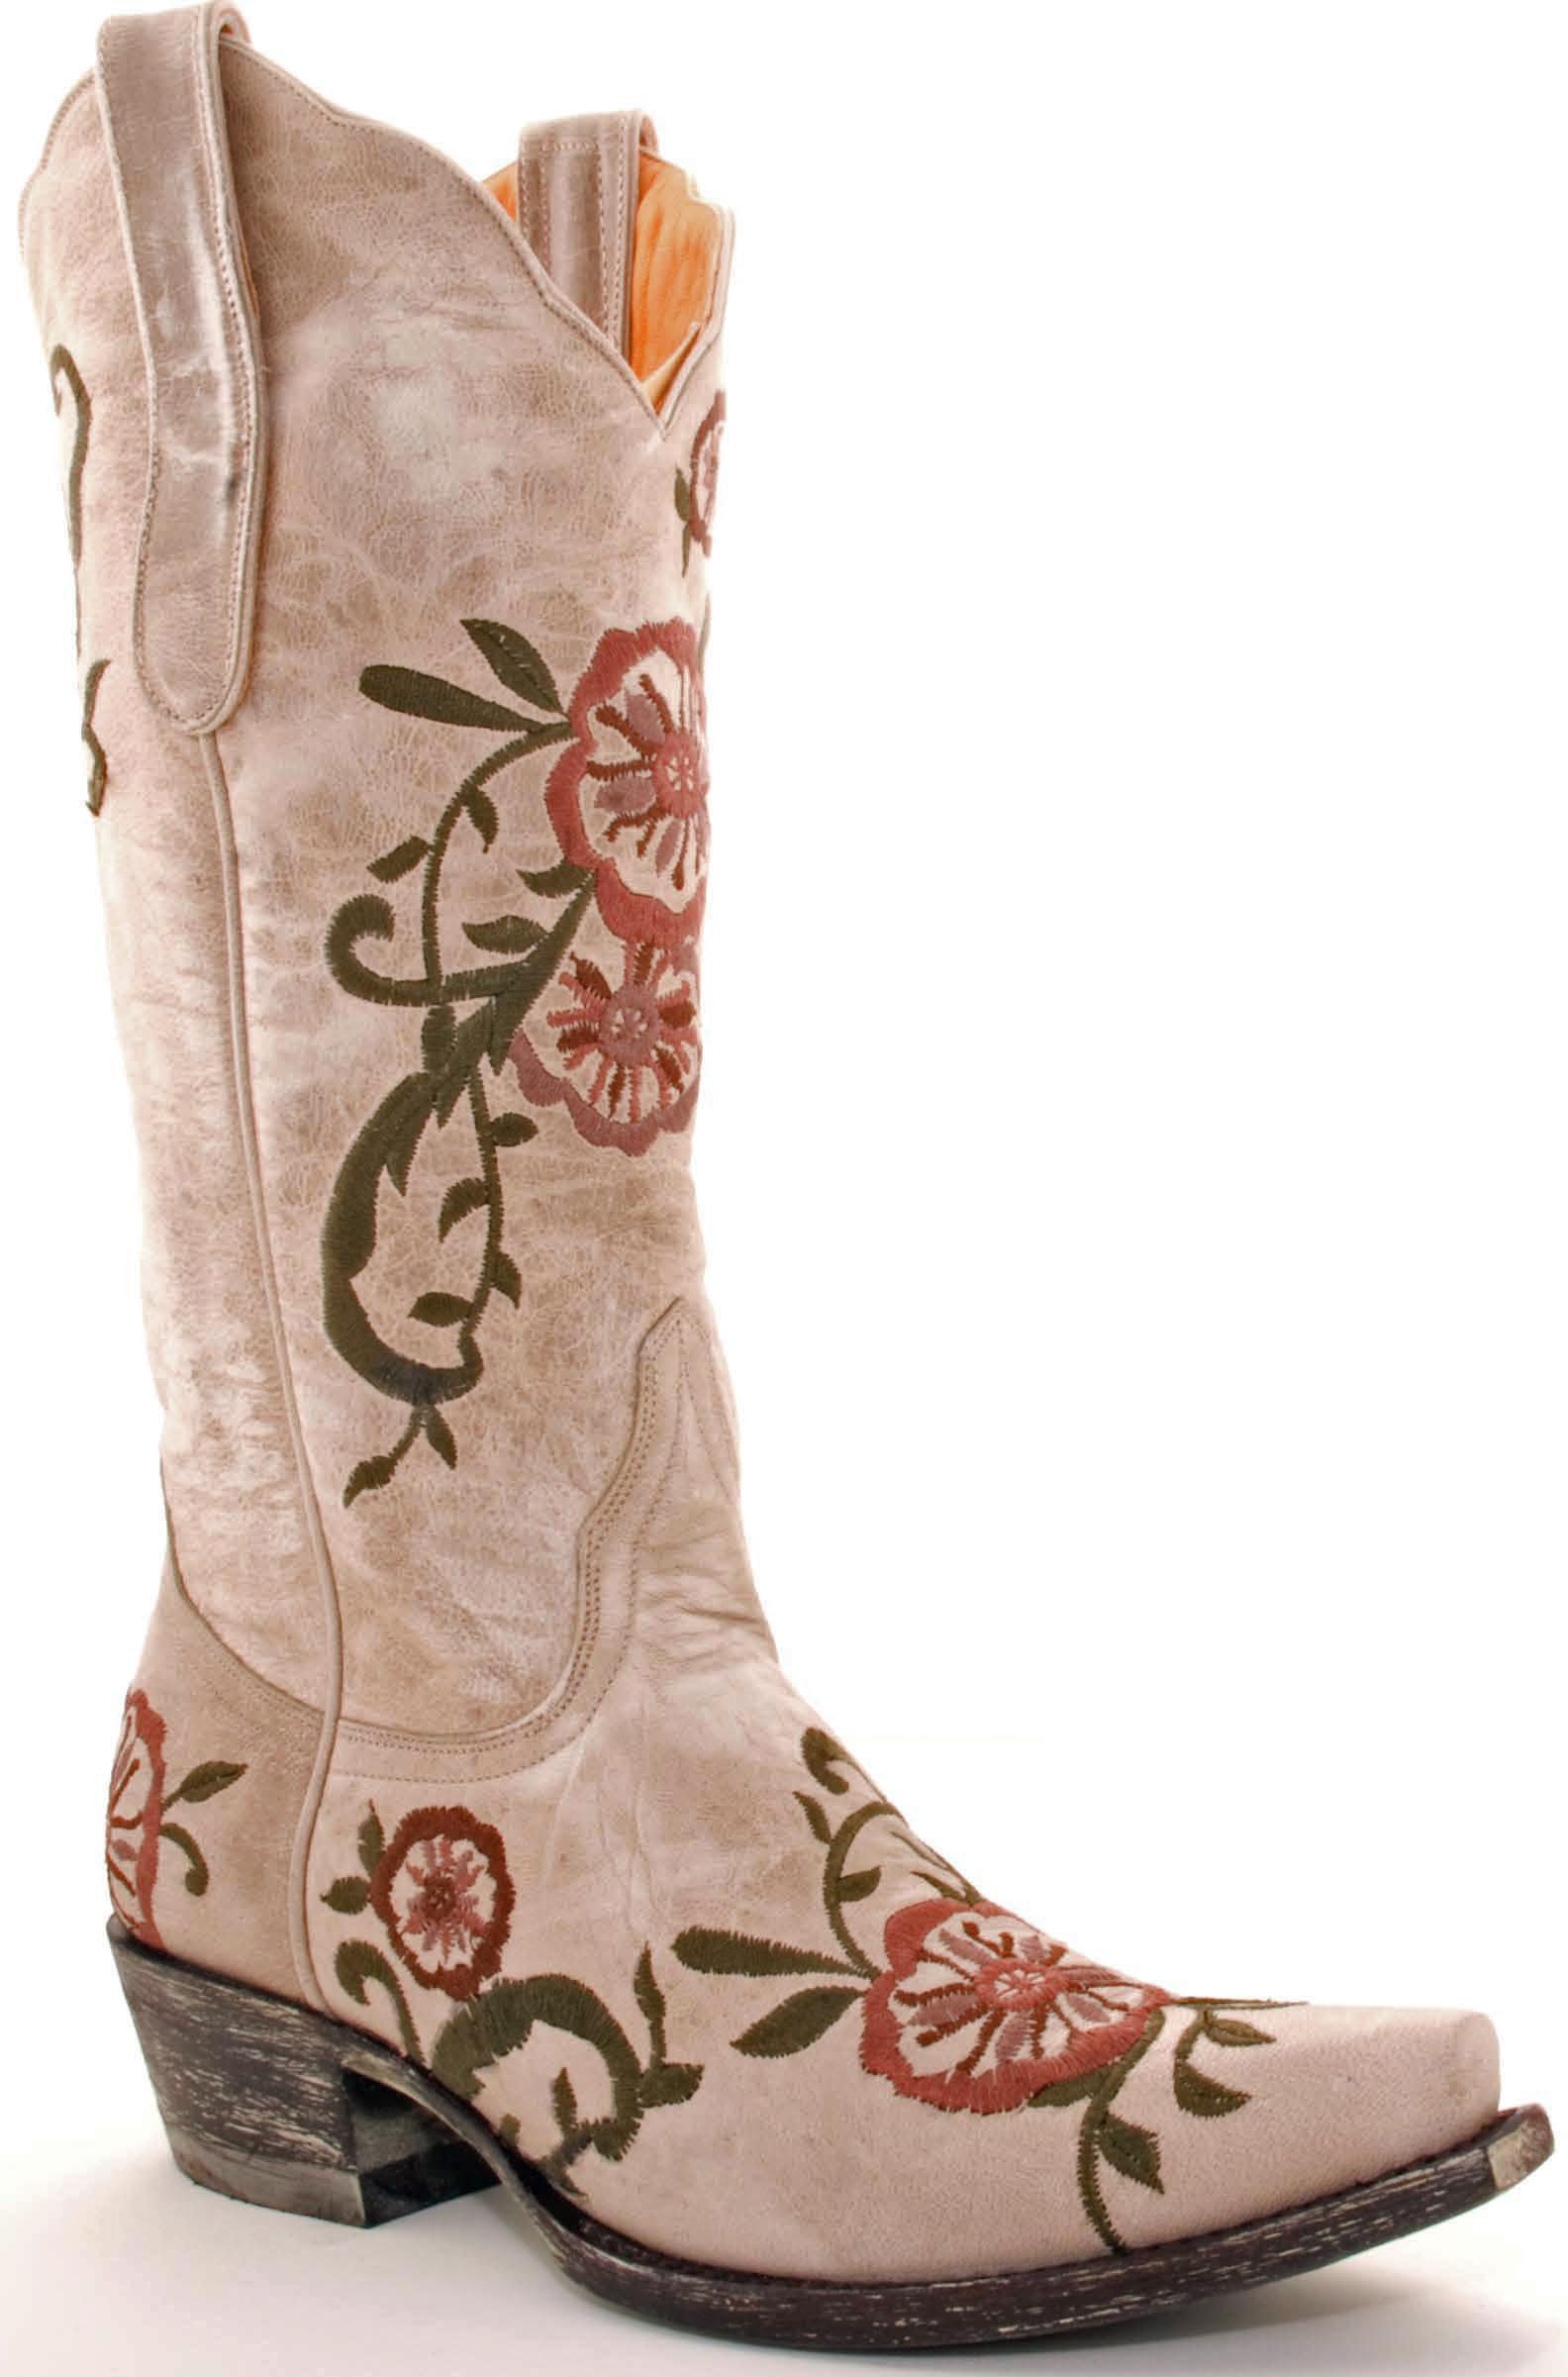 Old Gringo cowboy boots